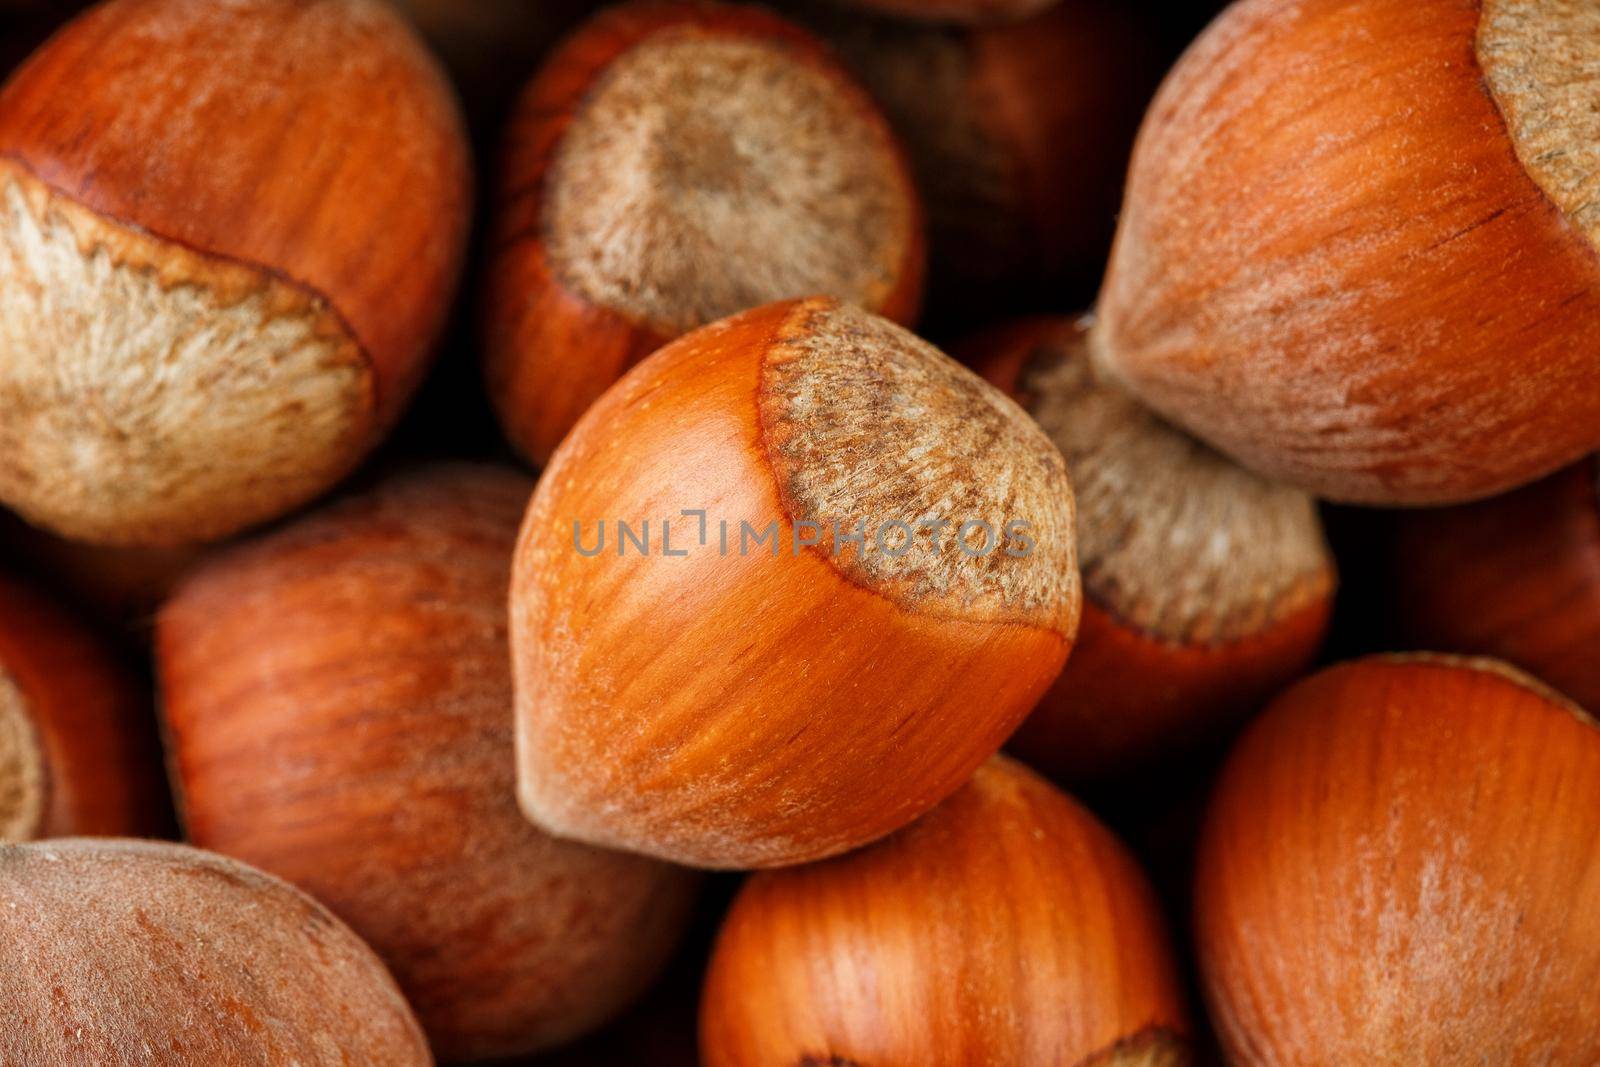 Dried unshelled hazelnuts seeds of Whole nuts as background. Hazelnuts. Stack of hazelnuts. Food background. Hazelnut background. Hazelnuts in shells background